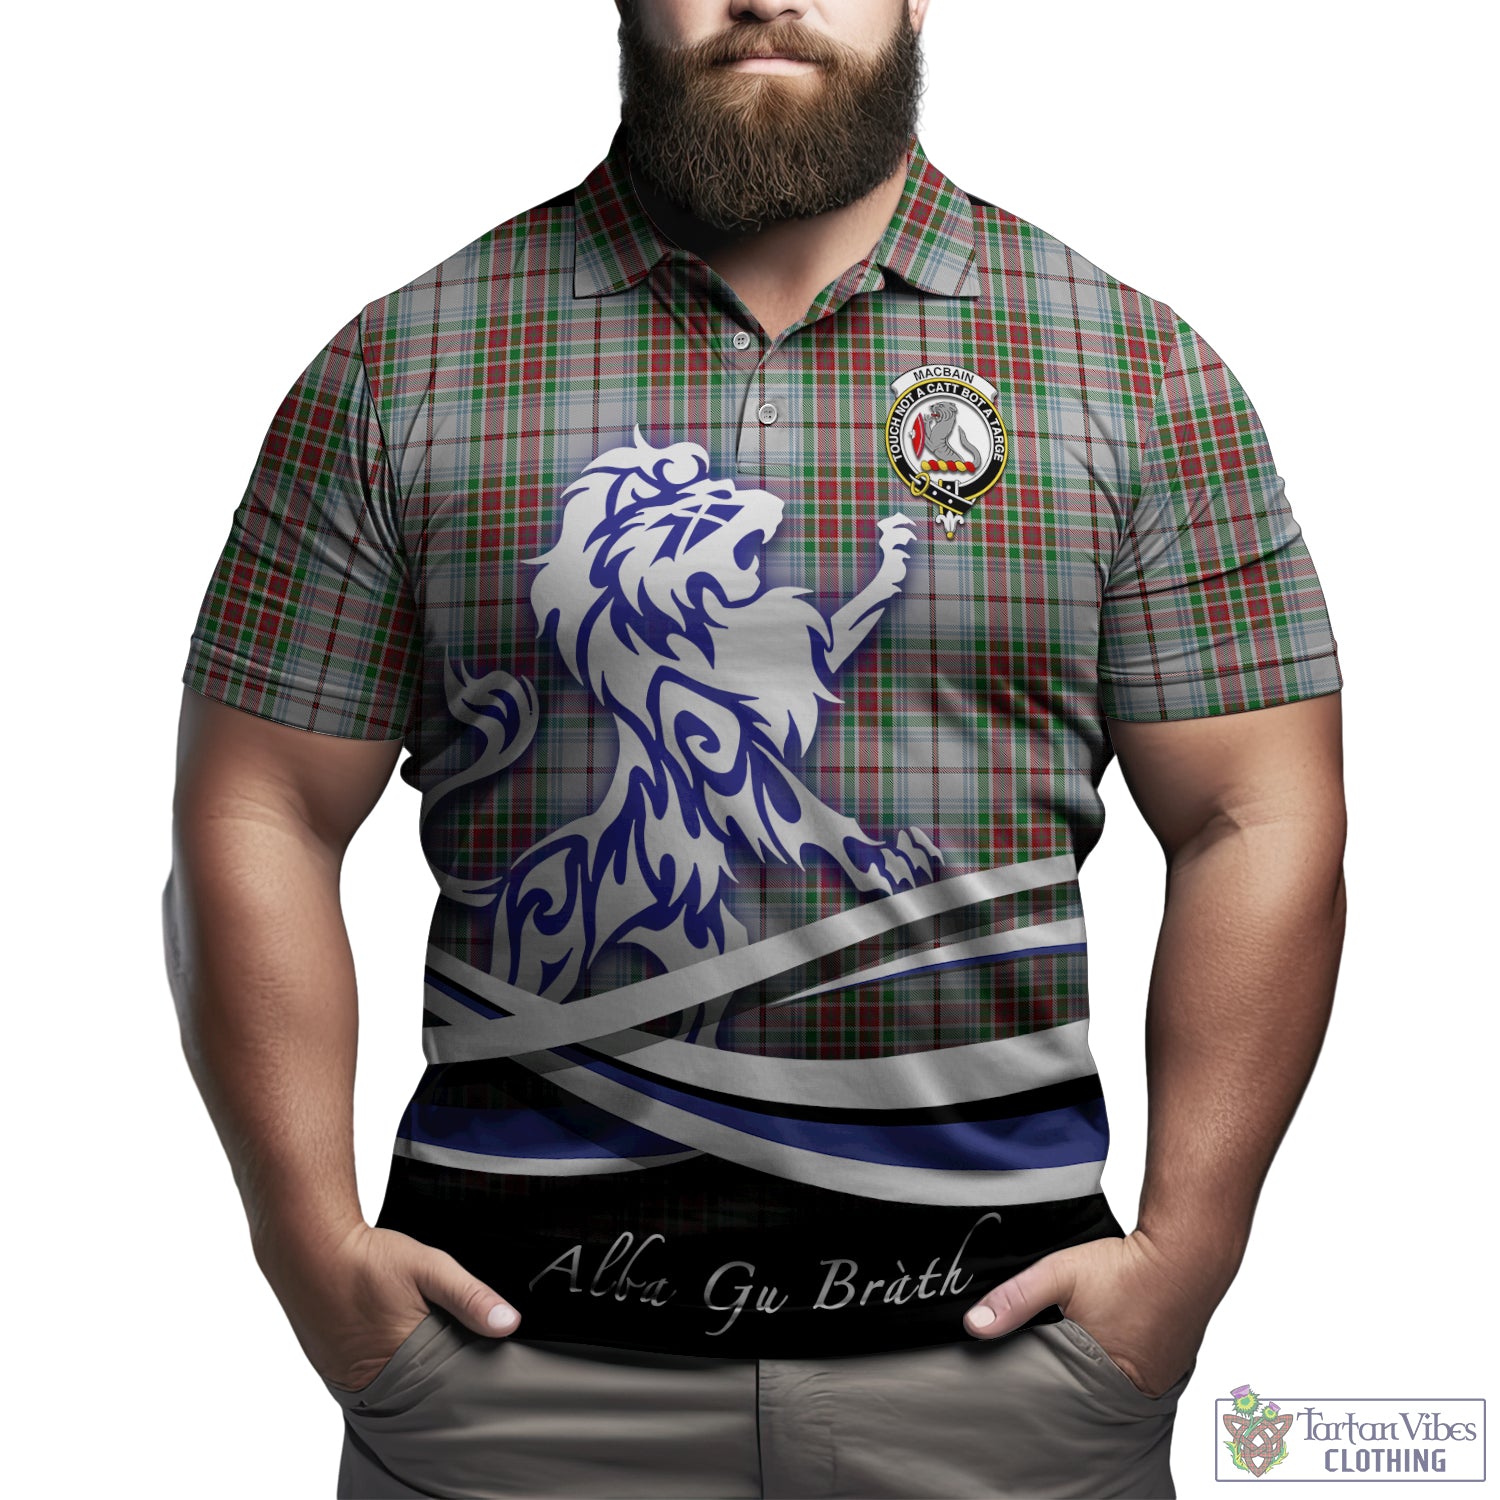 macbain-dress-tartan-polo-shirt-with-alba-gu-brath-regal-lion-emblem